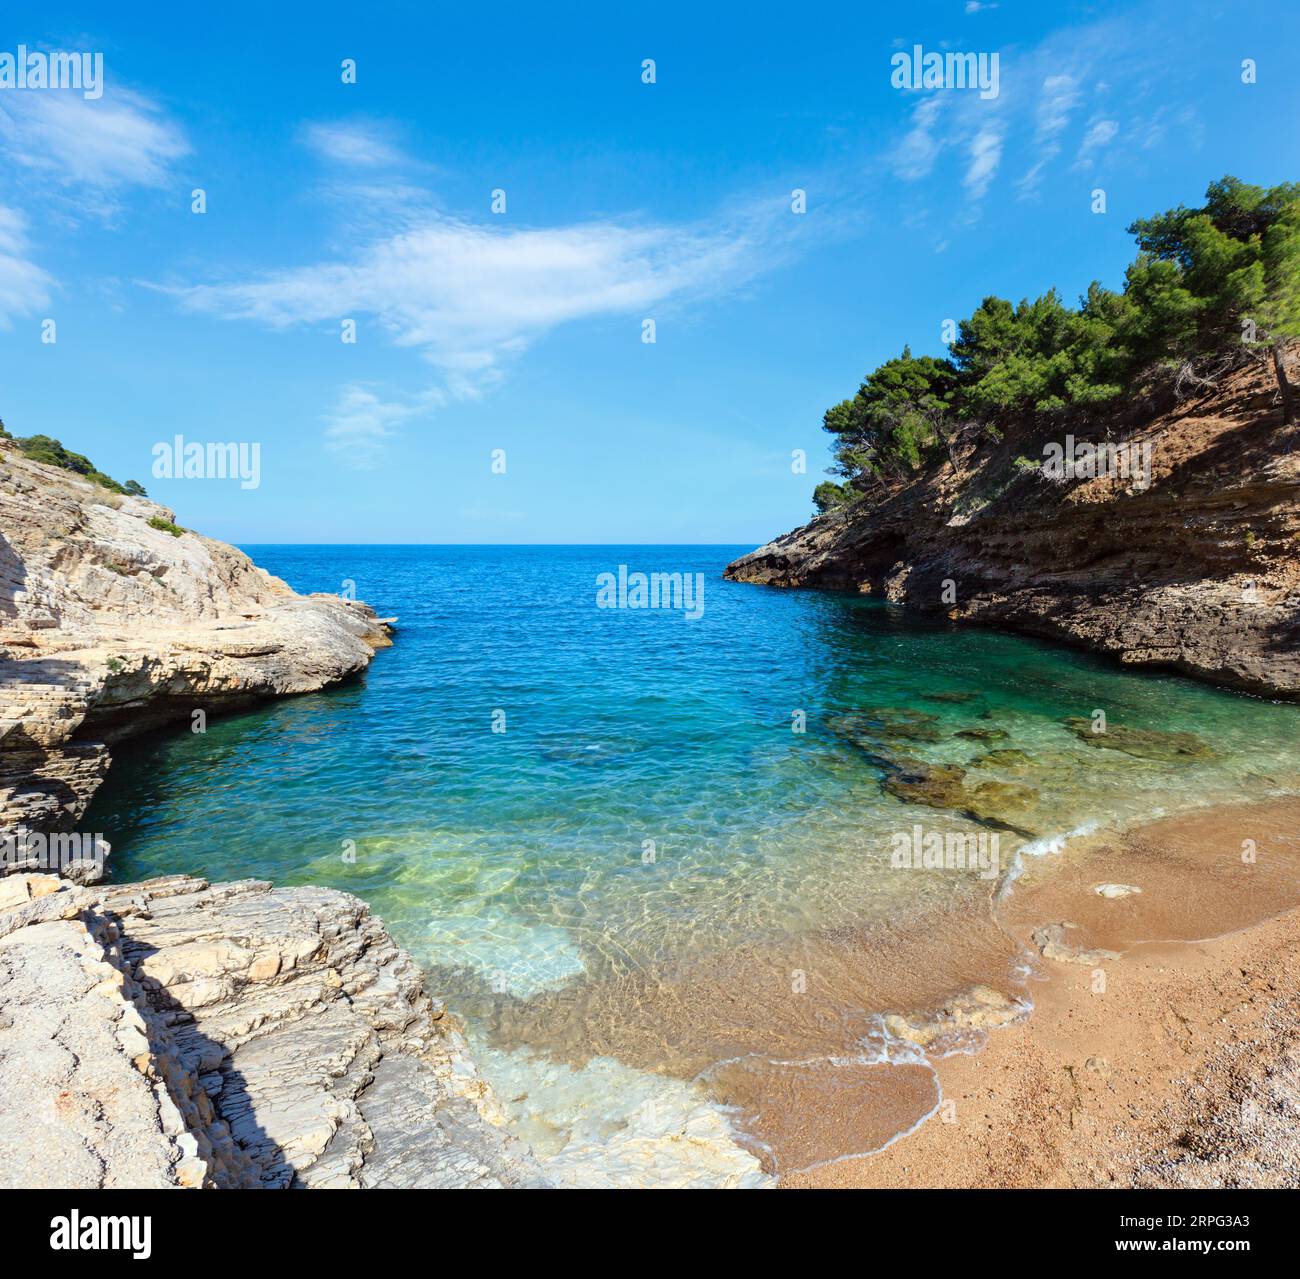 Sommer Baia della Pergola kleinen ruhigen ruhigen Strand, Halbinsel Gargano in Apulien, Italien Stockfoto